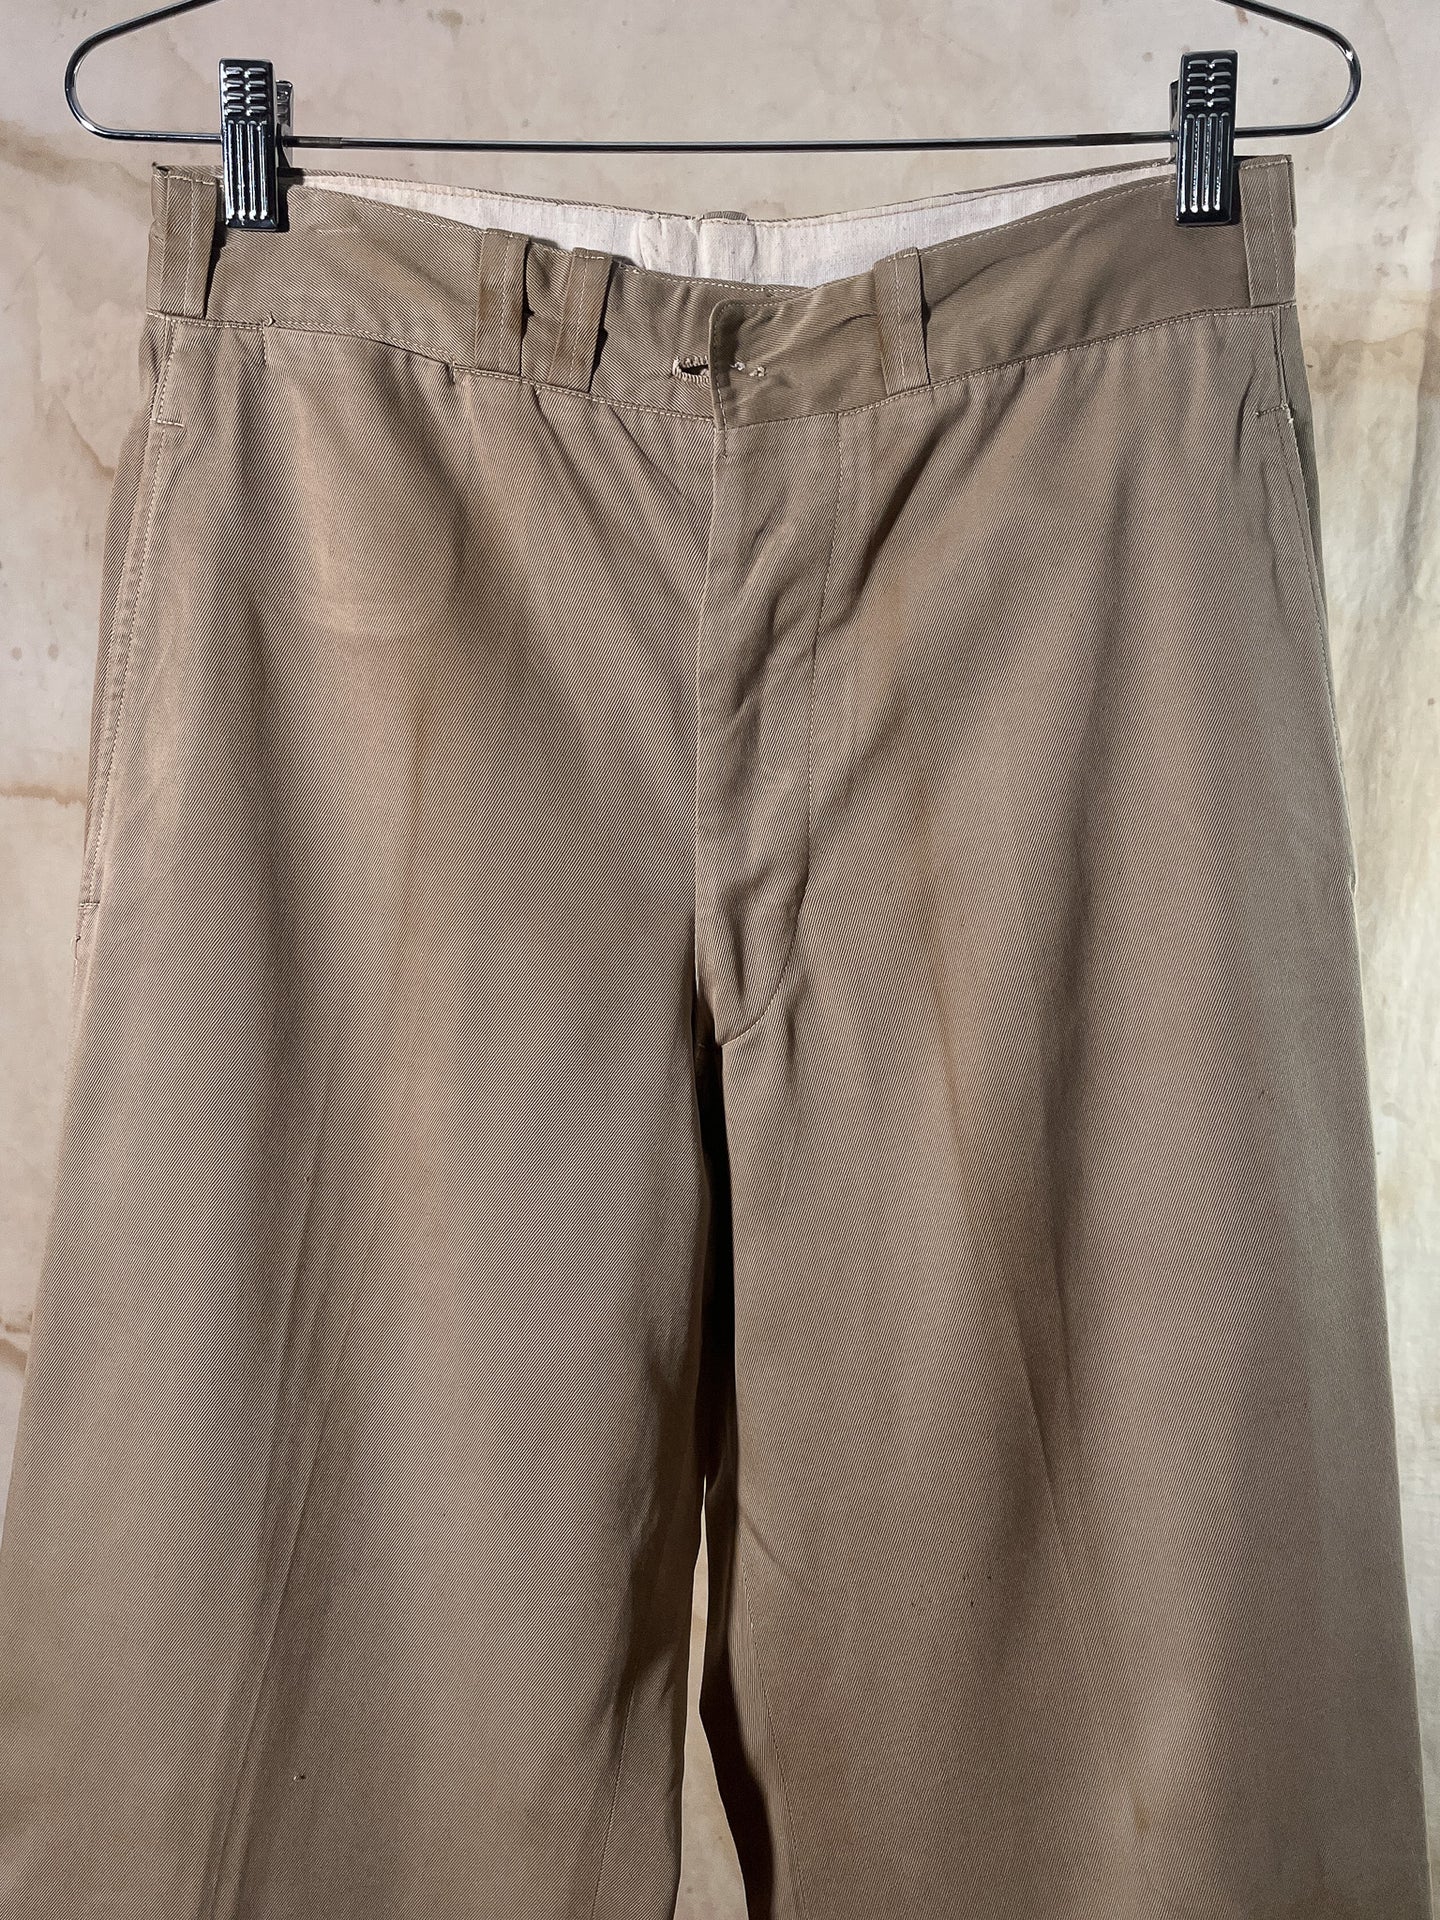 1930s US Army Cotton Khaki Trousers - 28-29